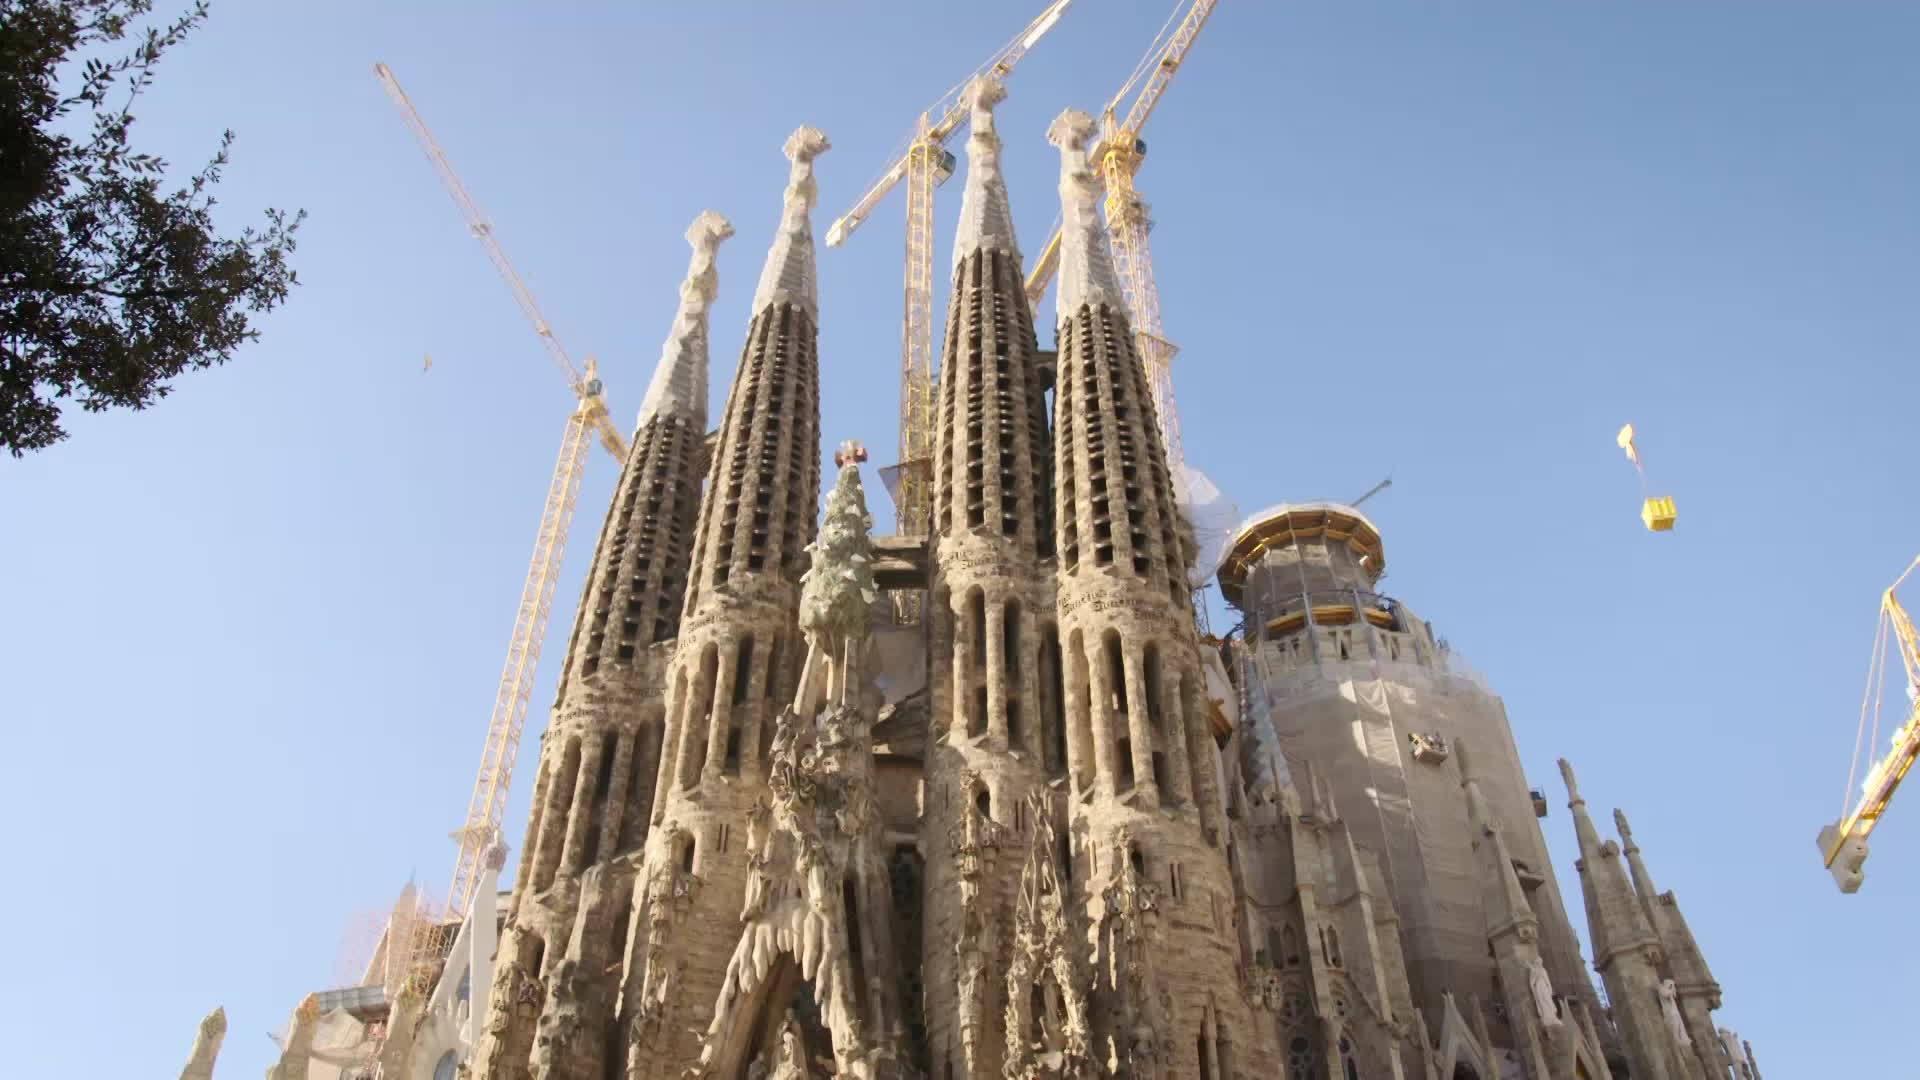 Sagrada Familia church granted Barcelona permit 136 years late. CNN